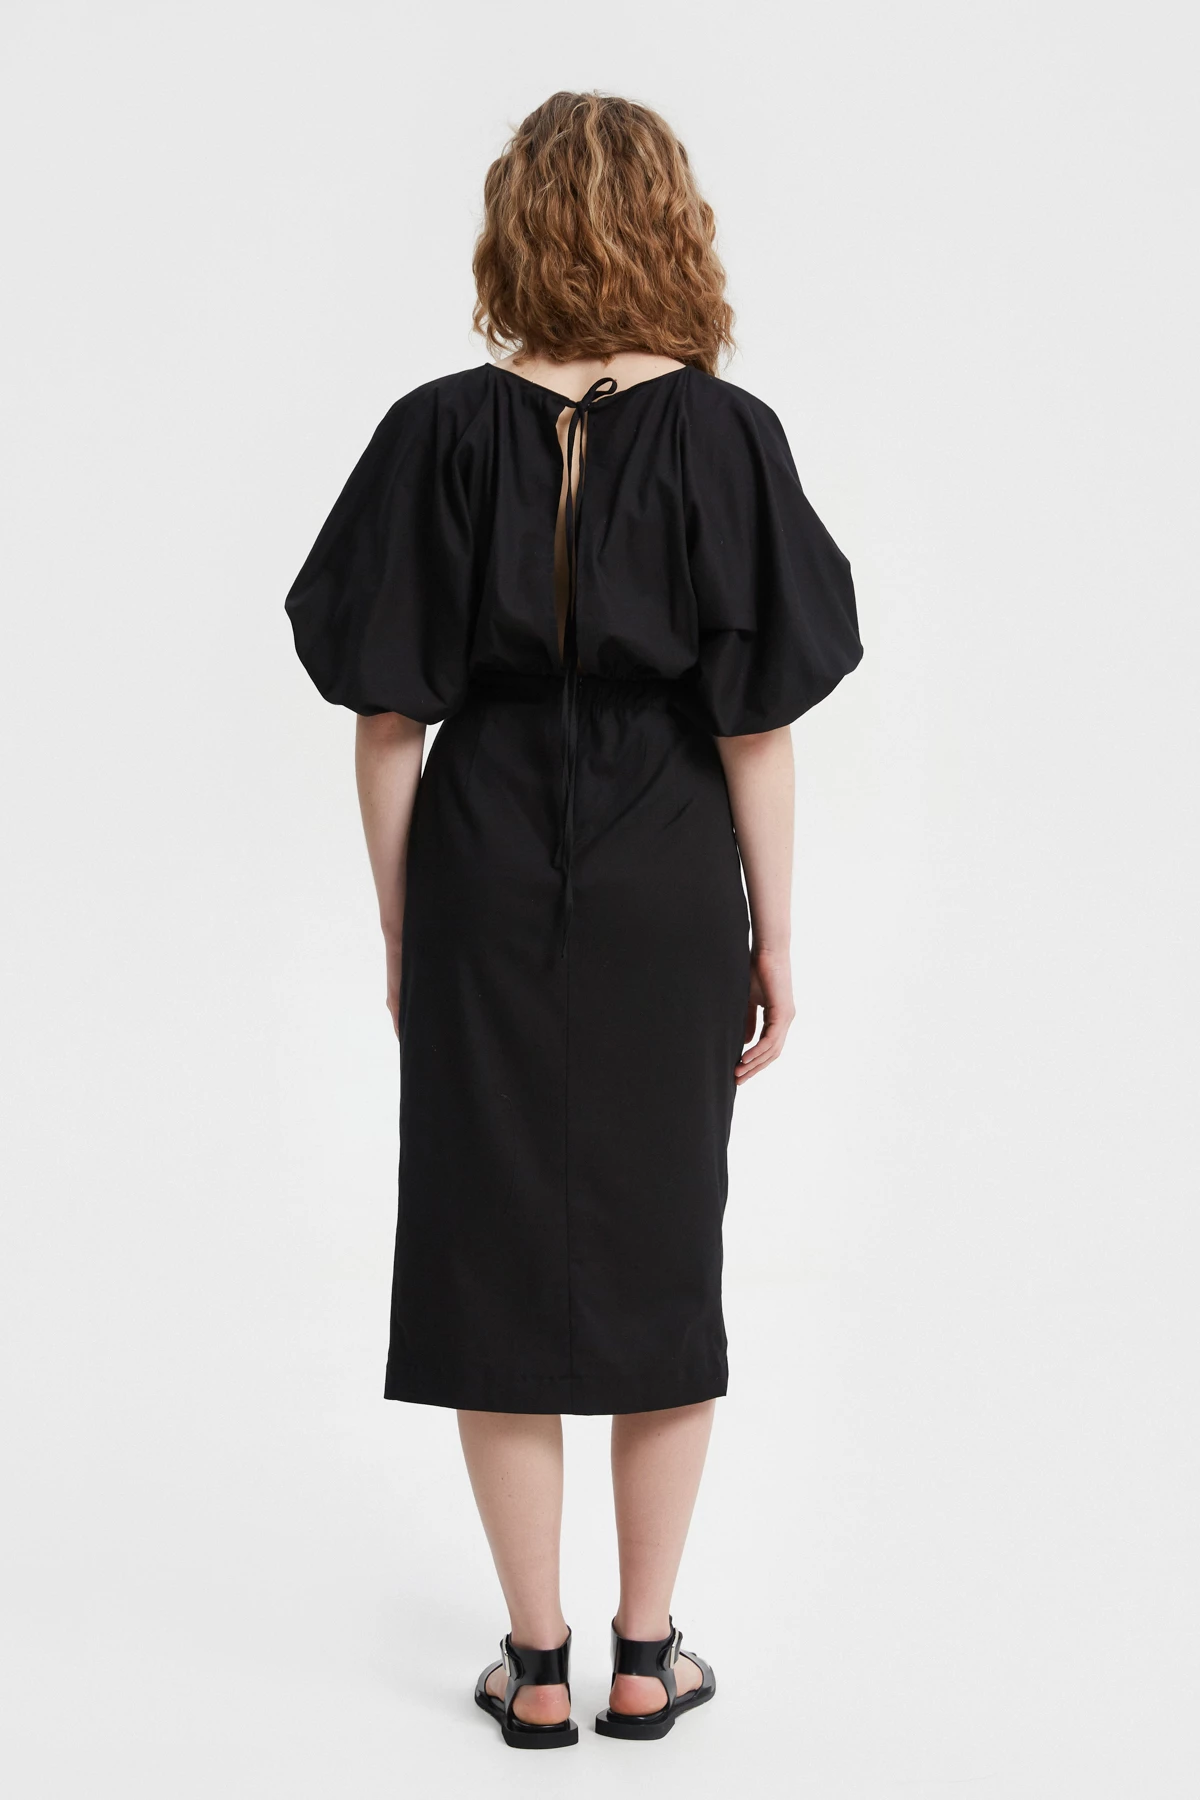 Black midi dress with voluminous top made of shirt fabric , photo 4